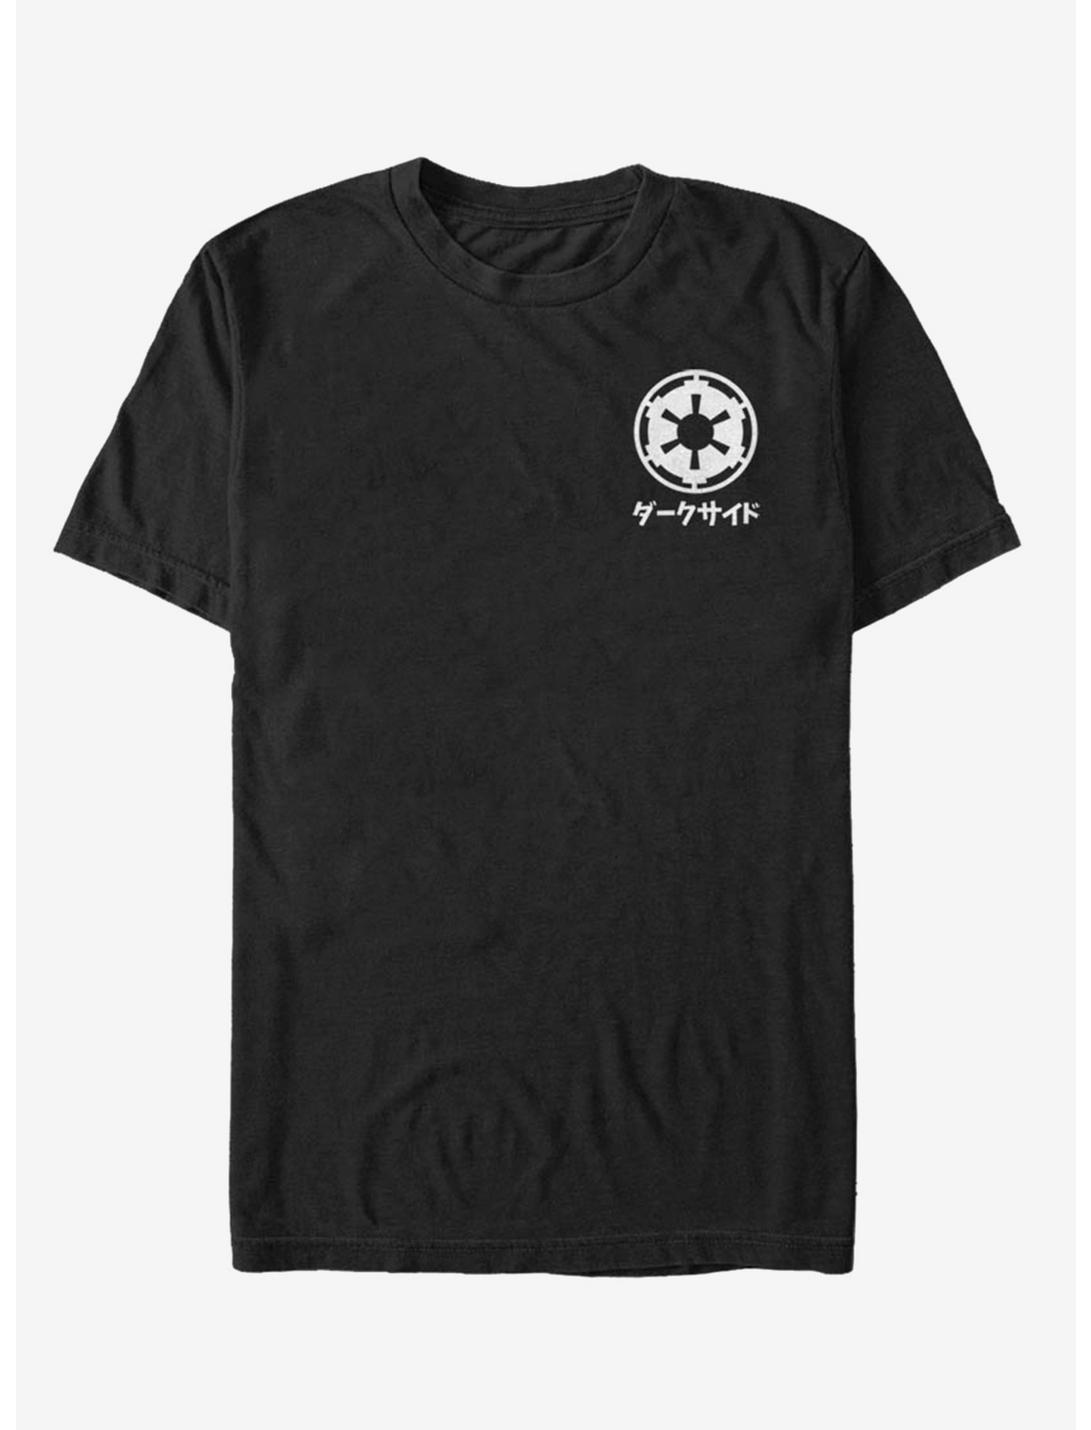 Star Wars Japanese Text T-Shirt, BLACK, hi-res